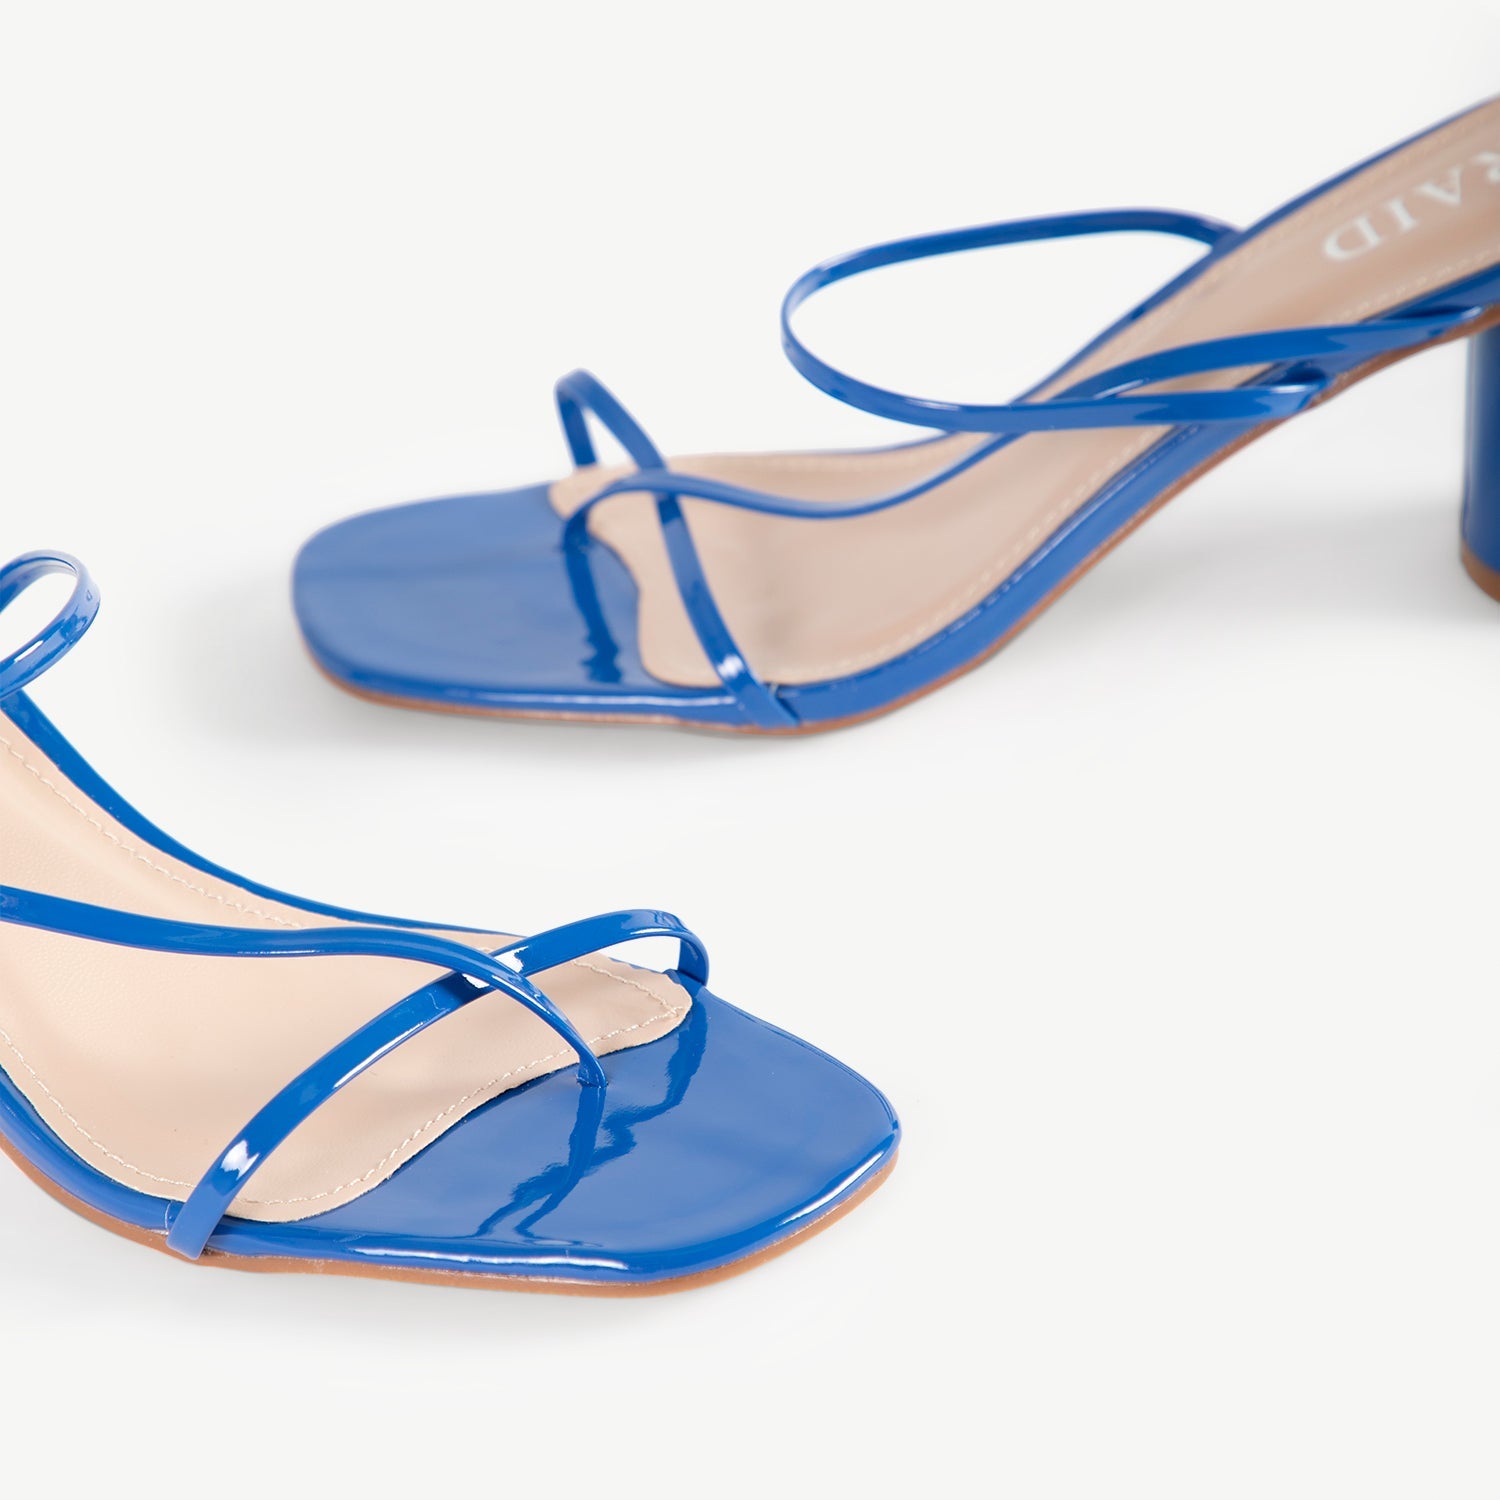 RAID Brioni Heeled Sandal in Blue Patent